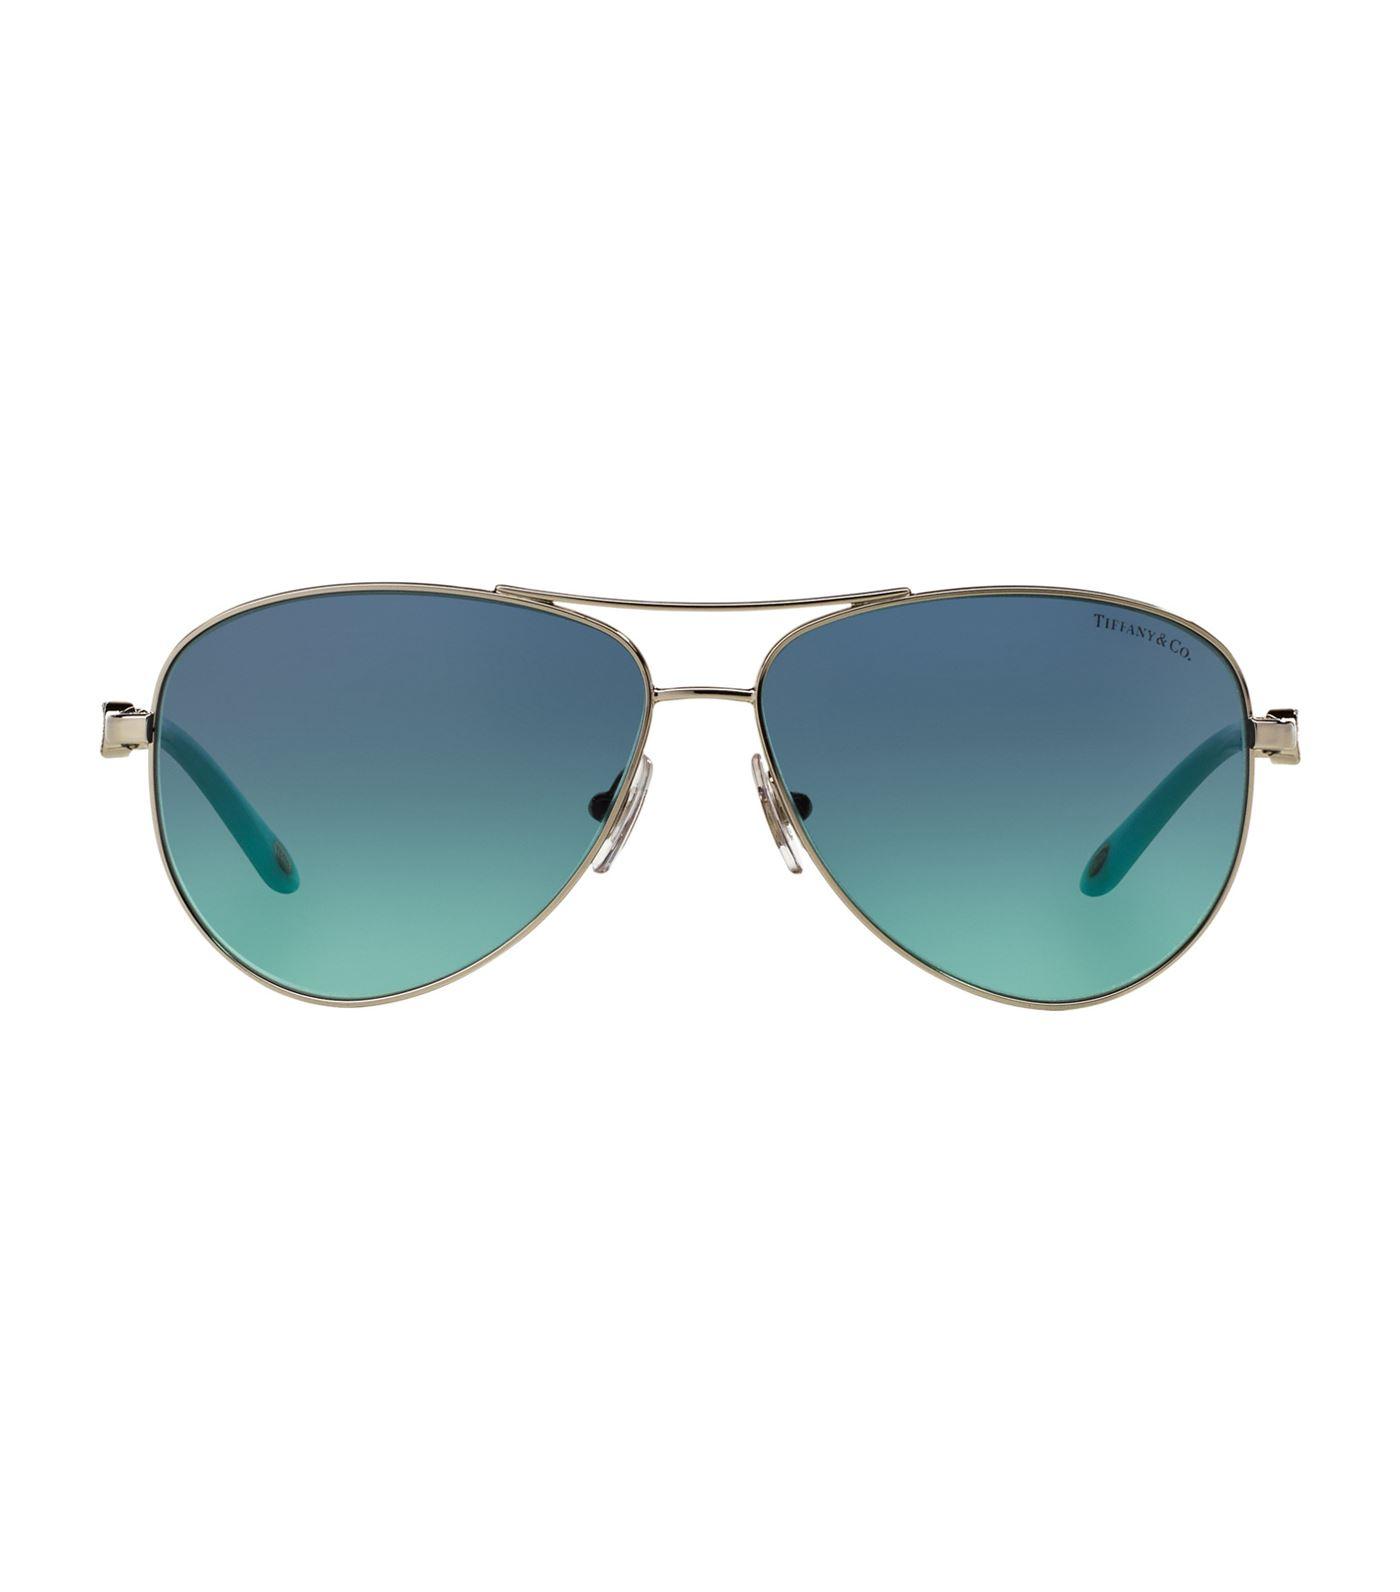 Tiffany & Co. Aviator Sunglasses in Silver (Metallic) - Lyst